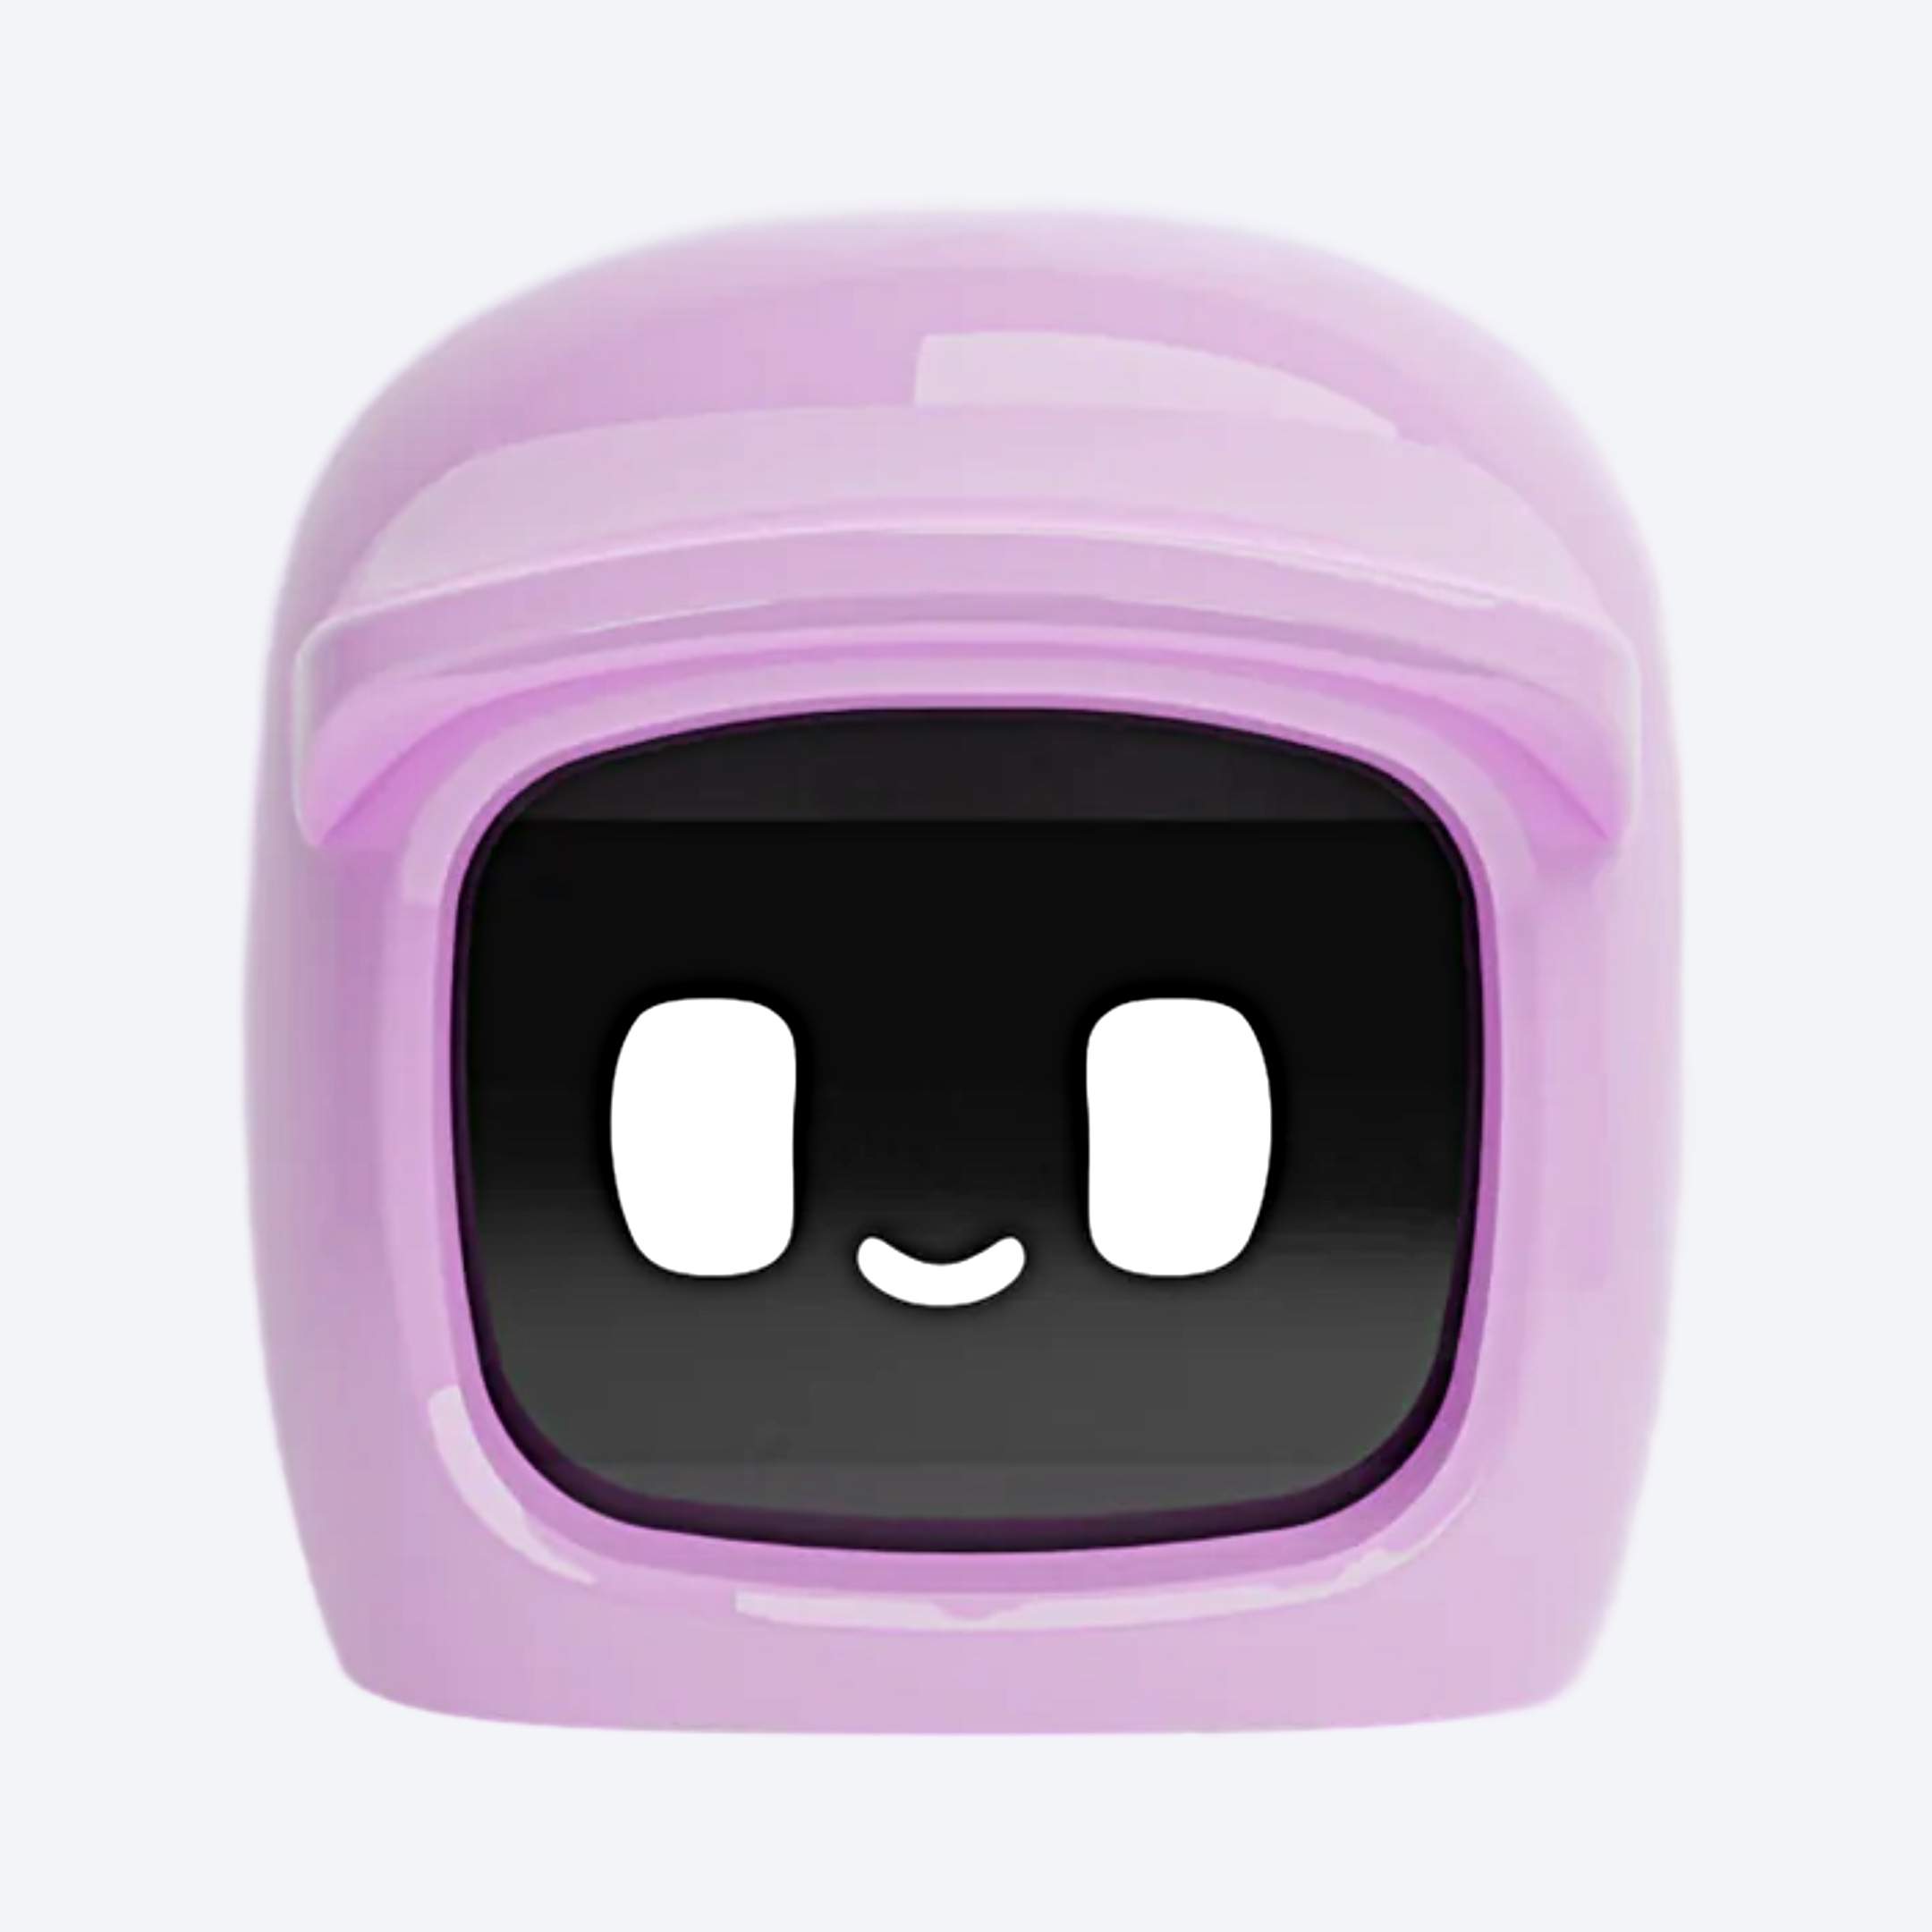 Dasai mochi 2.0 pink helmet